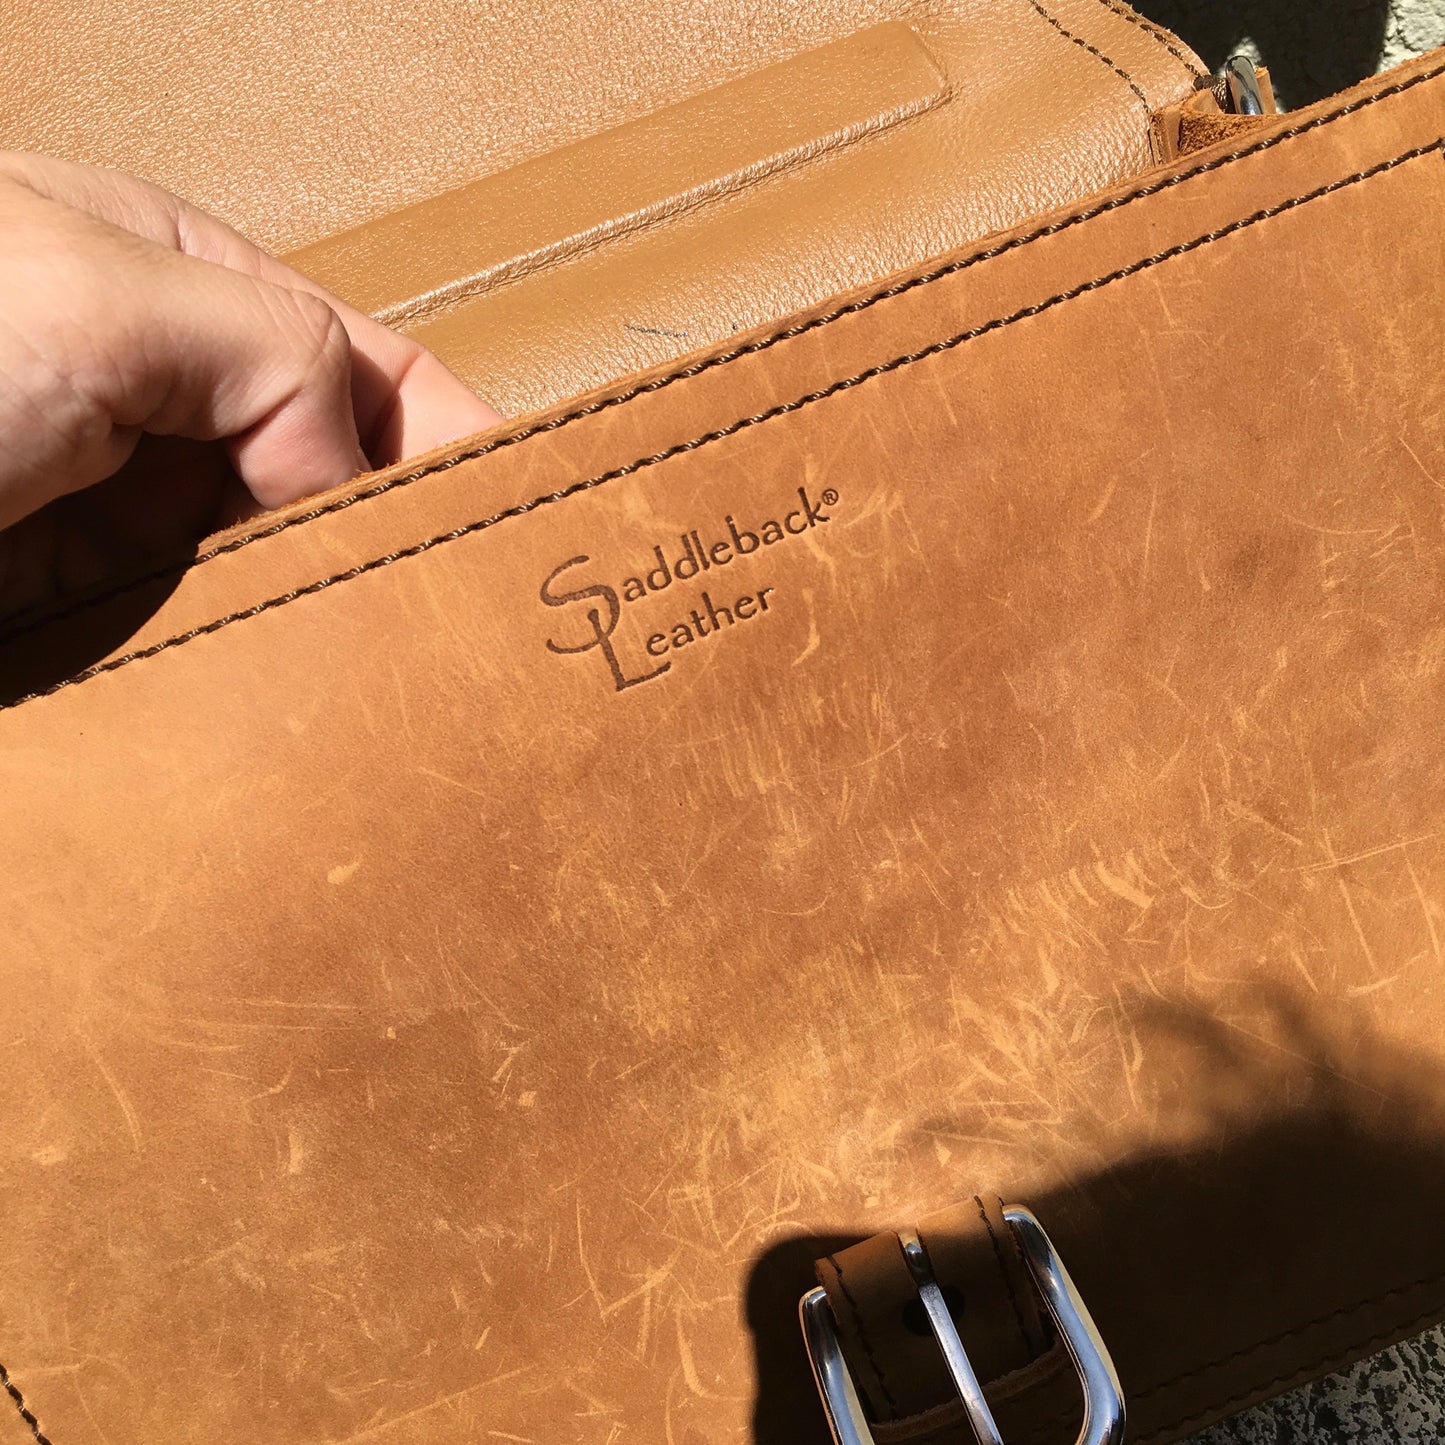 Saddleback Leather Company Tan Leather Tobacco Small Shoulder Bag - Hashtag Watch Company